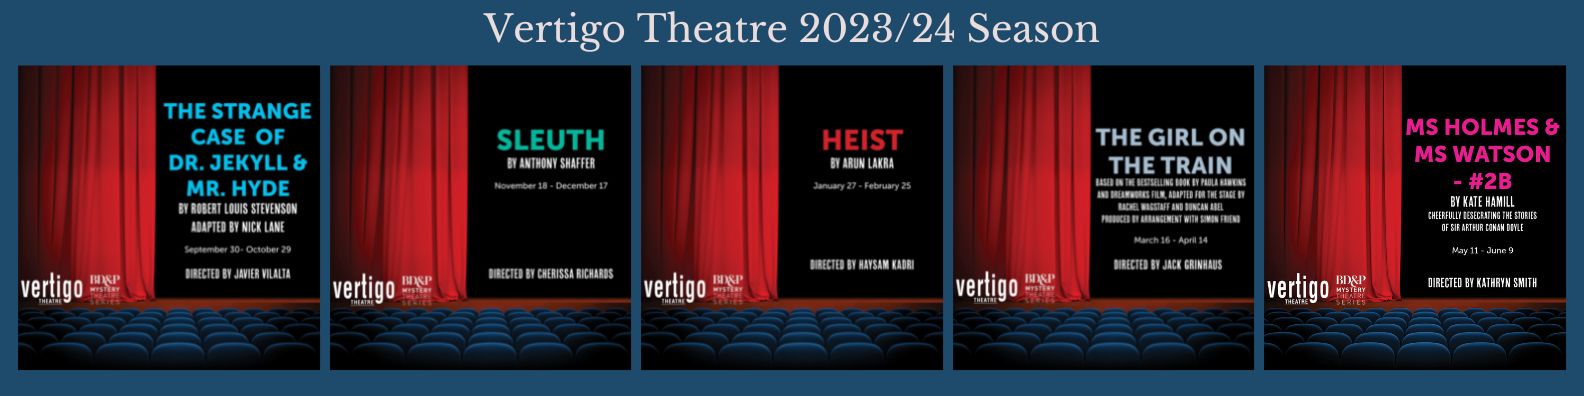 Vertigo Theatre 2023/24 Season - The Strange Case of Dr. Jekyll & Mr. Hyde - Sleuth - Heist - The Girl on the Trail - Ms Holmes & Ms Watson - #2B